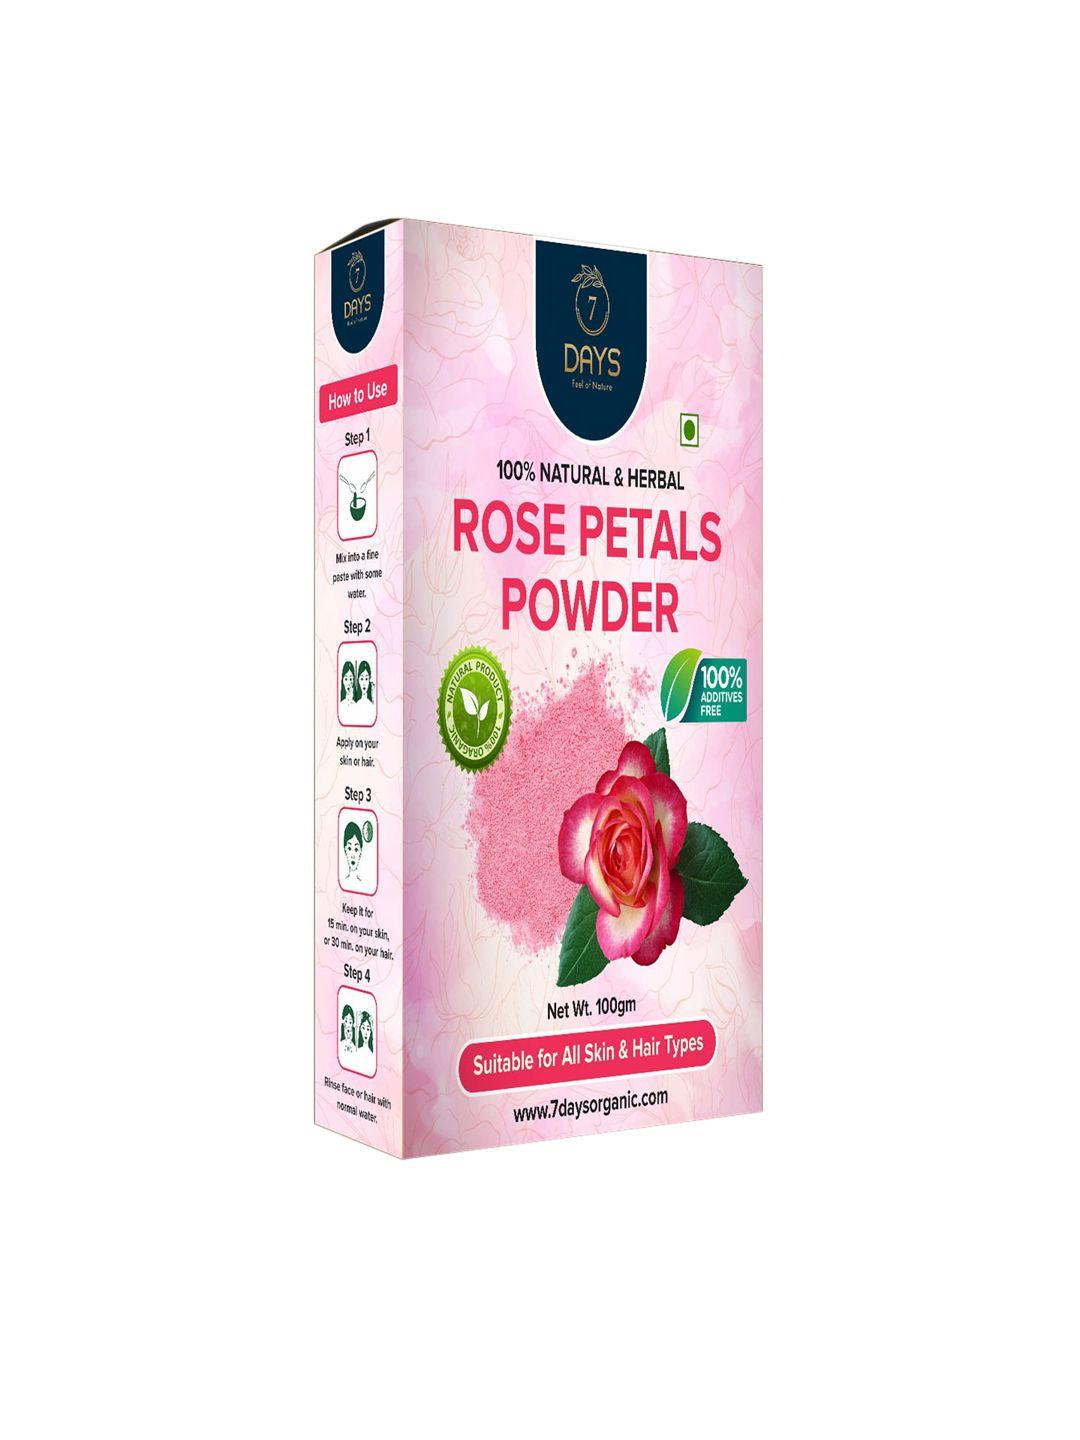 7 days 100% natural & pure rose petals powder for hair & skin - 100 g